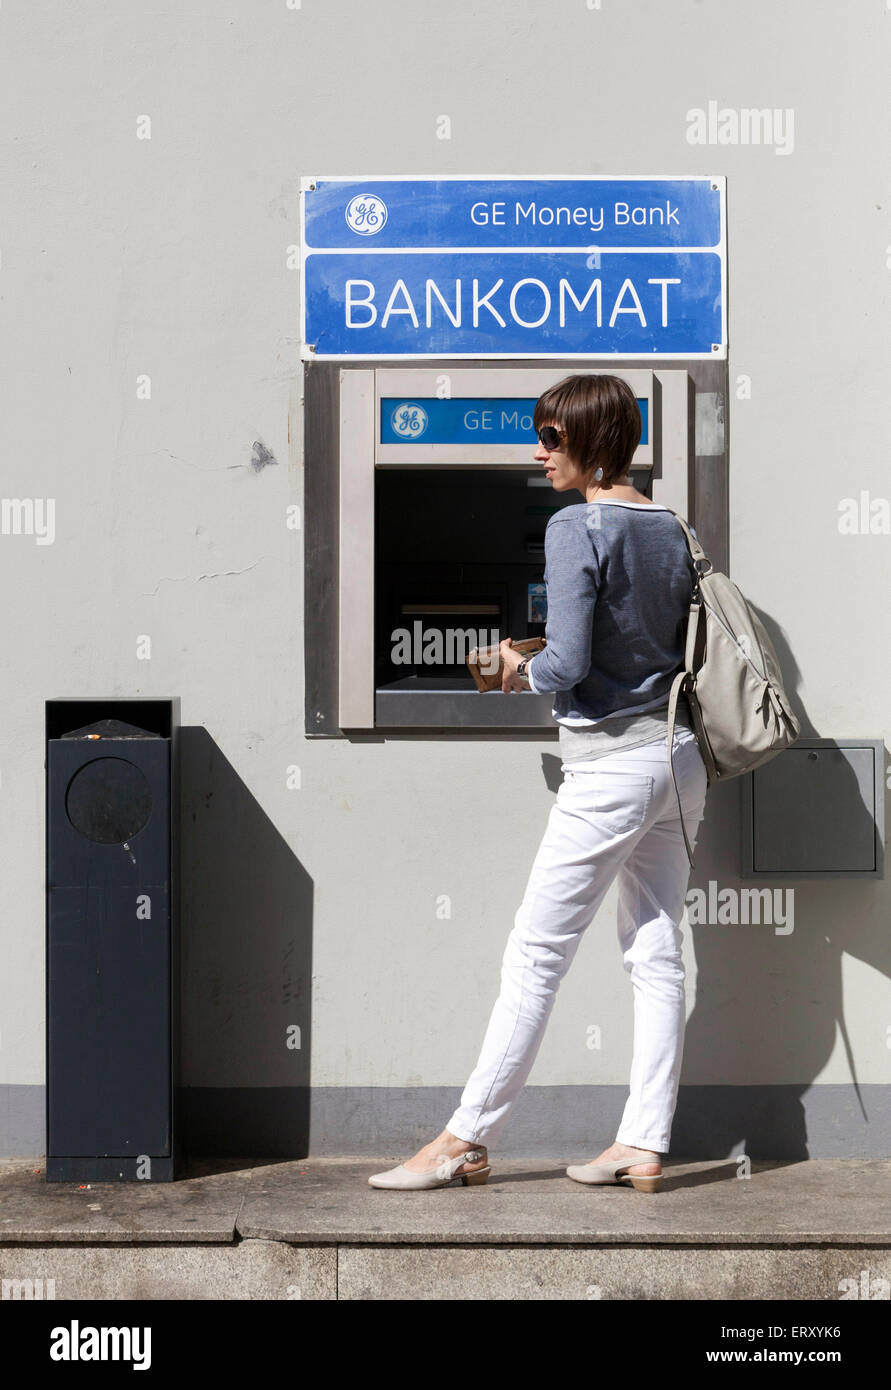 GE Money Bank woman ATM money withdraw, Czech Republic woman withdrawing cash Stock Photo